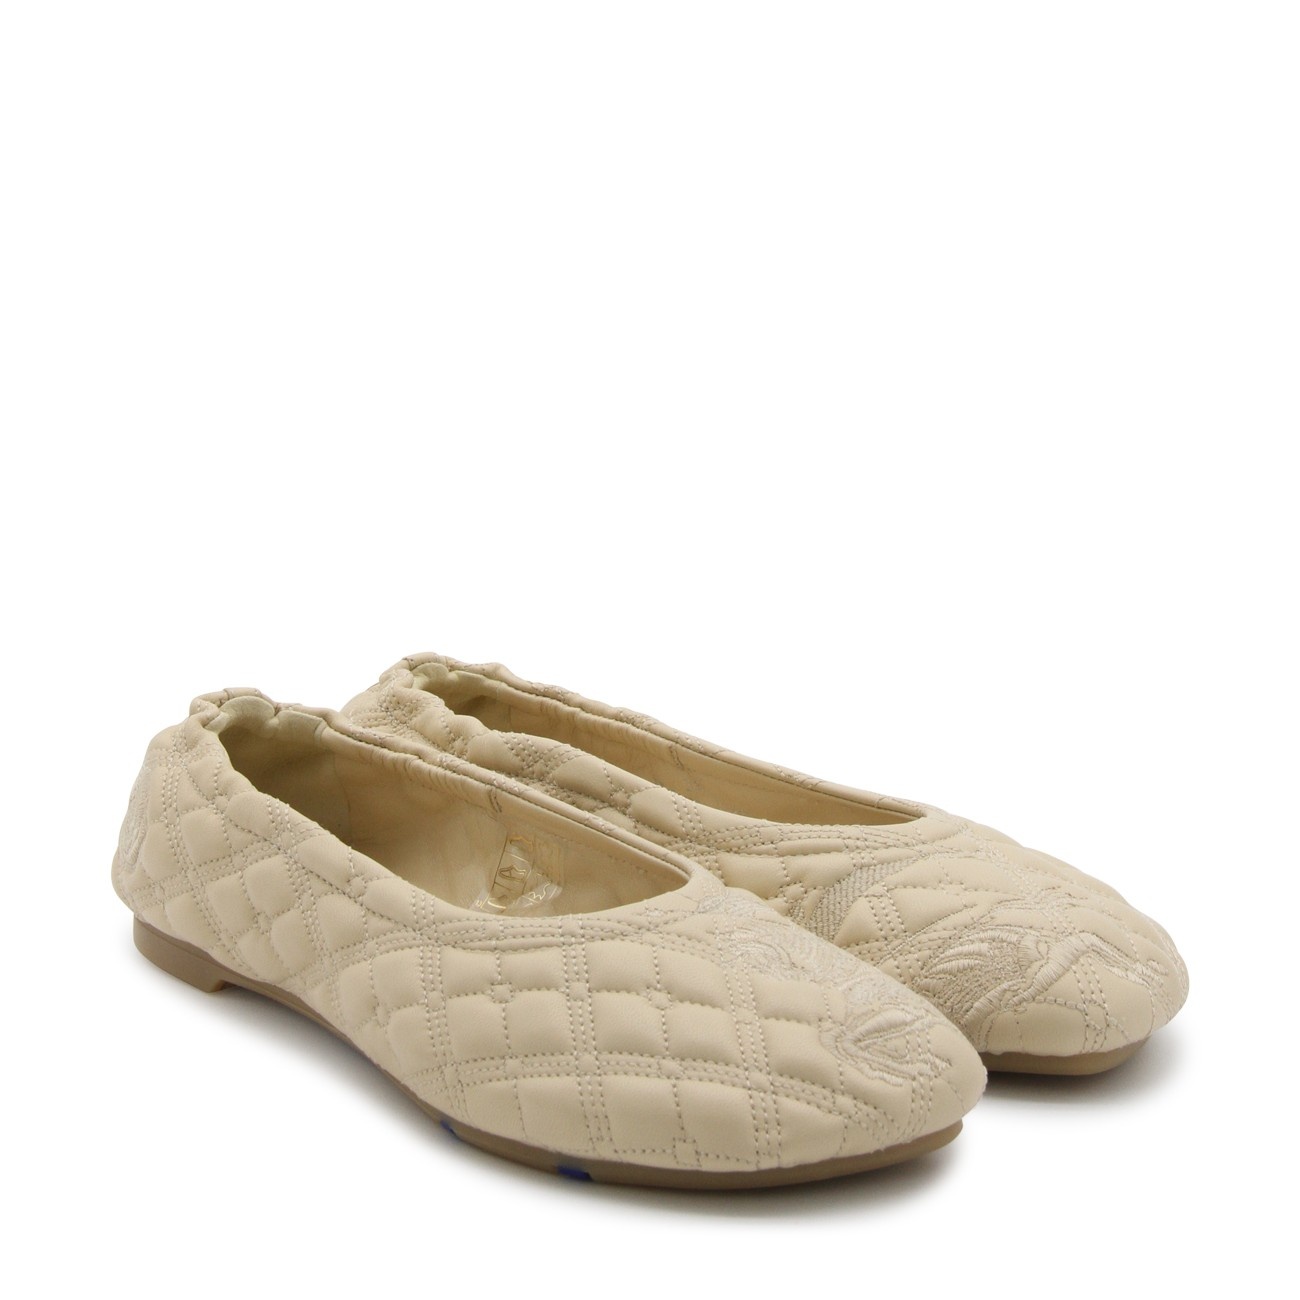 cream leather ballerina shoes - 2